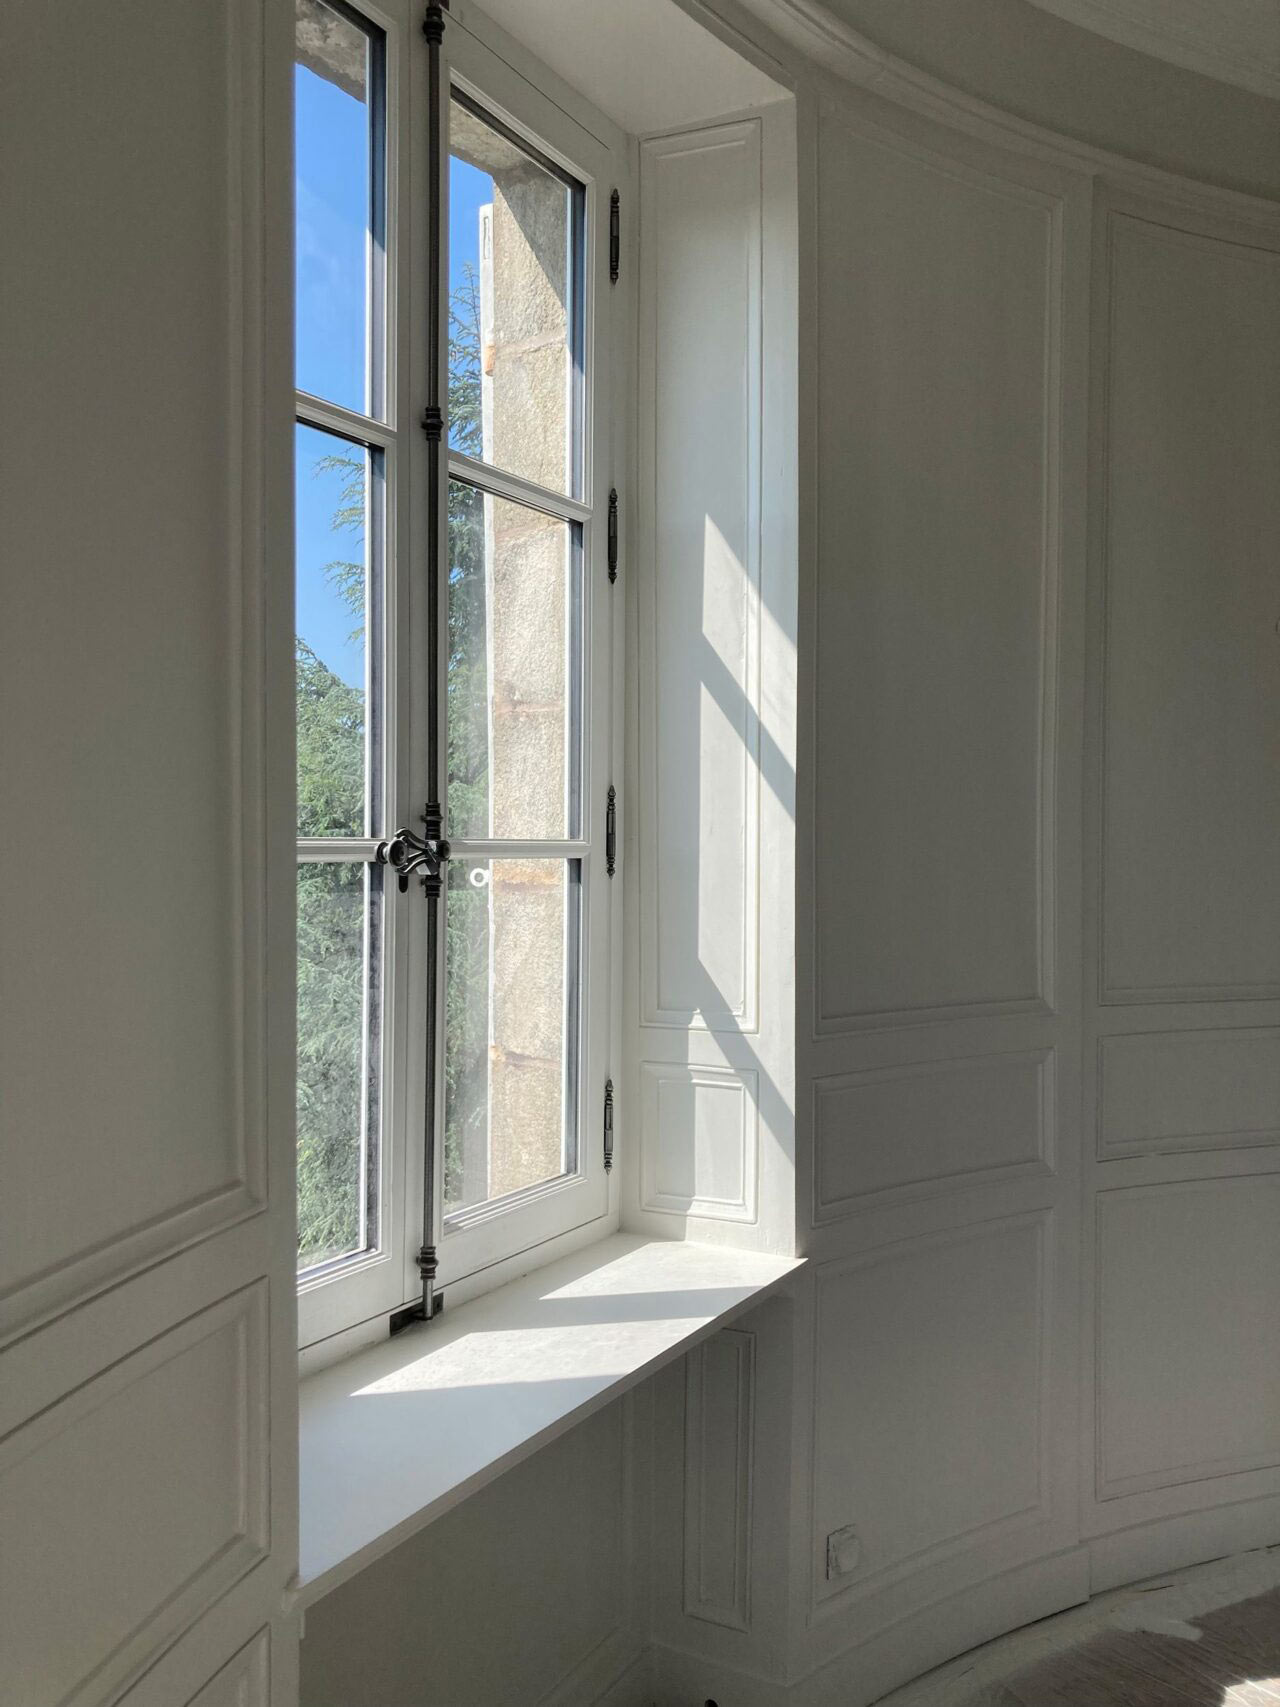 New bespoke window installed, painted white.